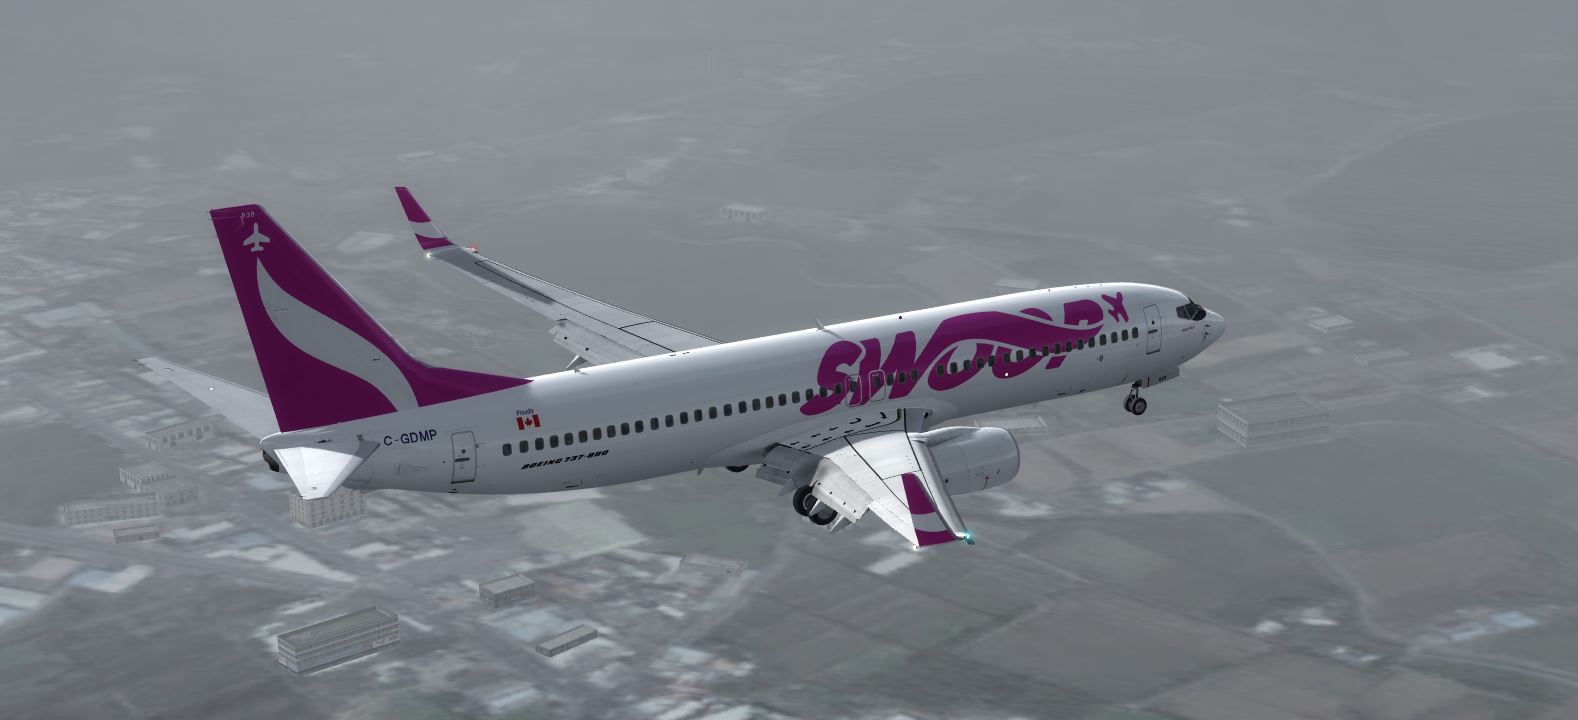 B737-800 Swoop Airlines-5267 